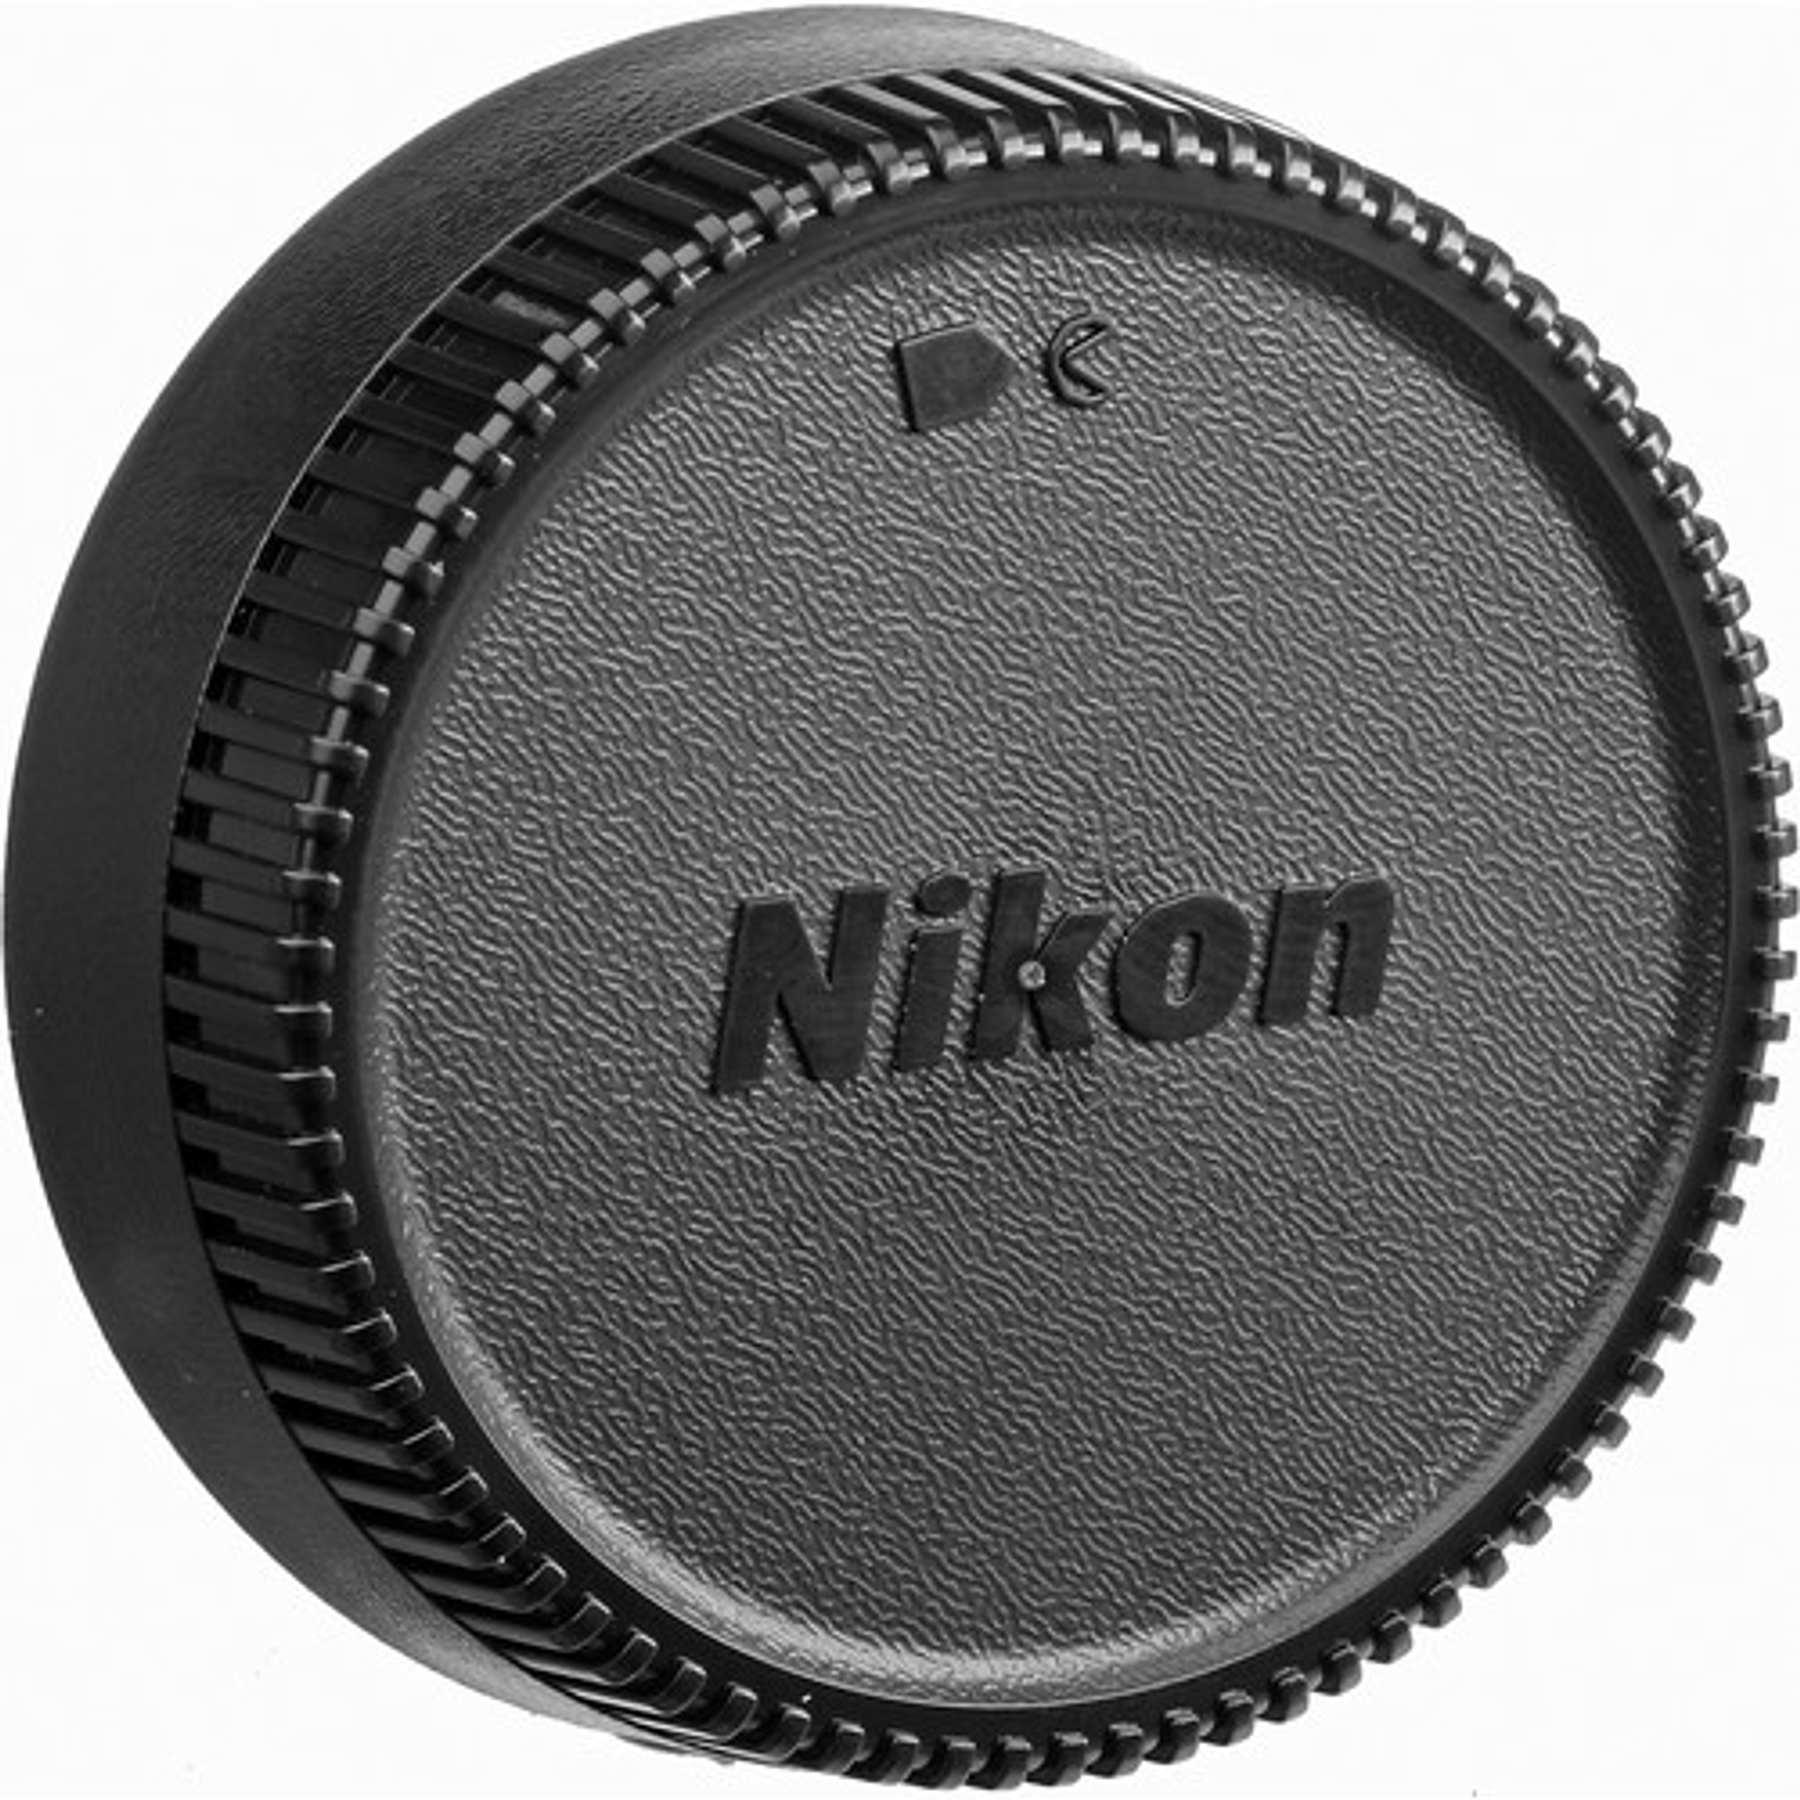 Nikon F AF-S 16-35 f4G ED VR (U)